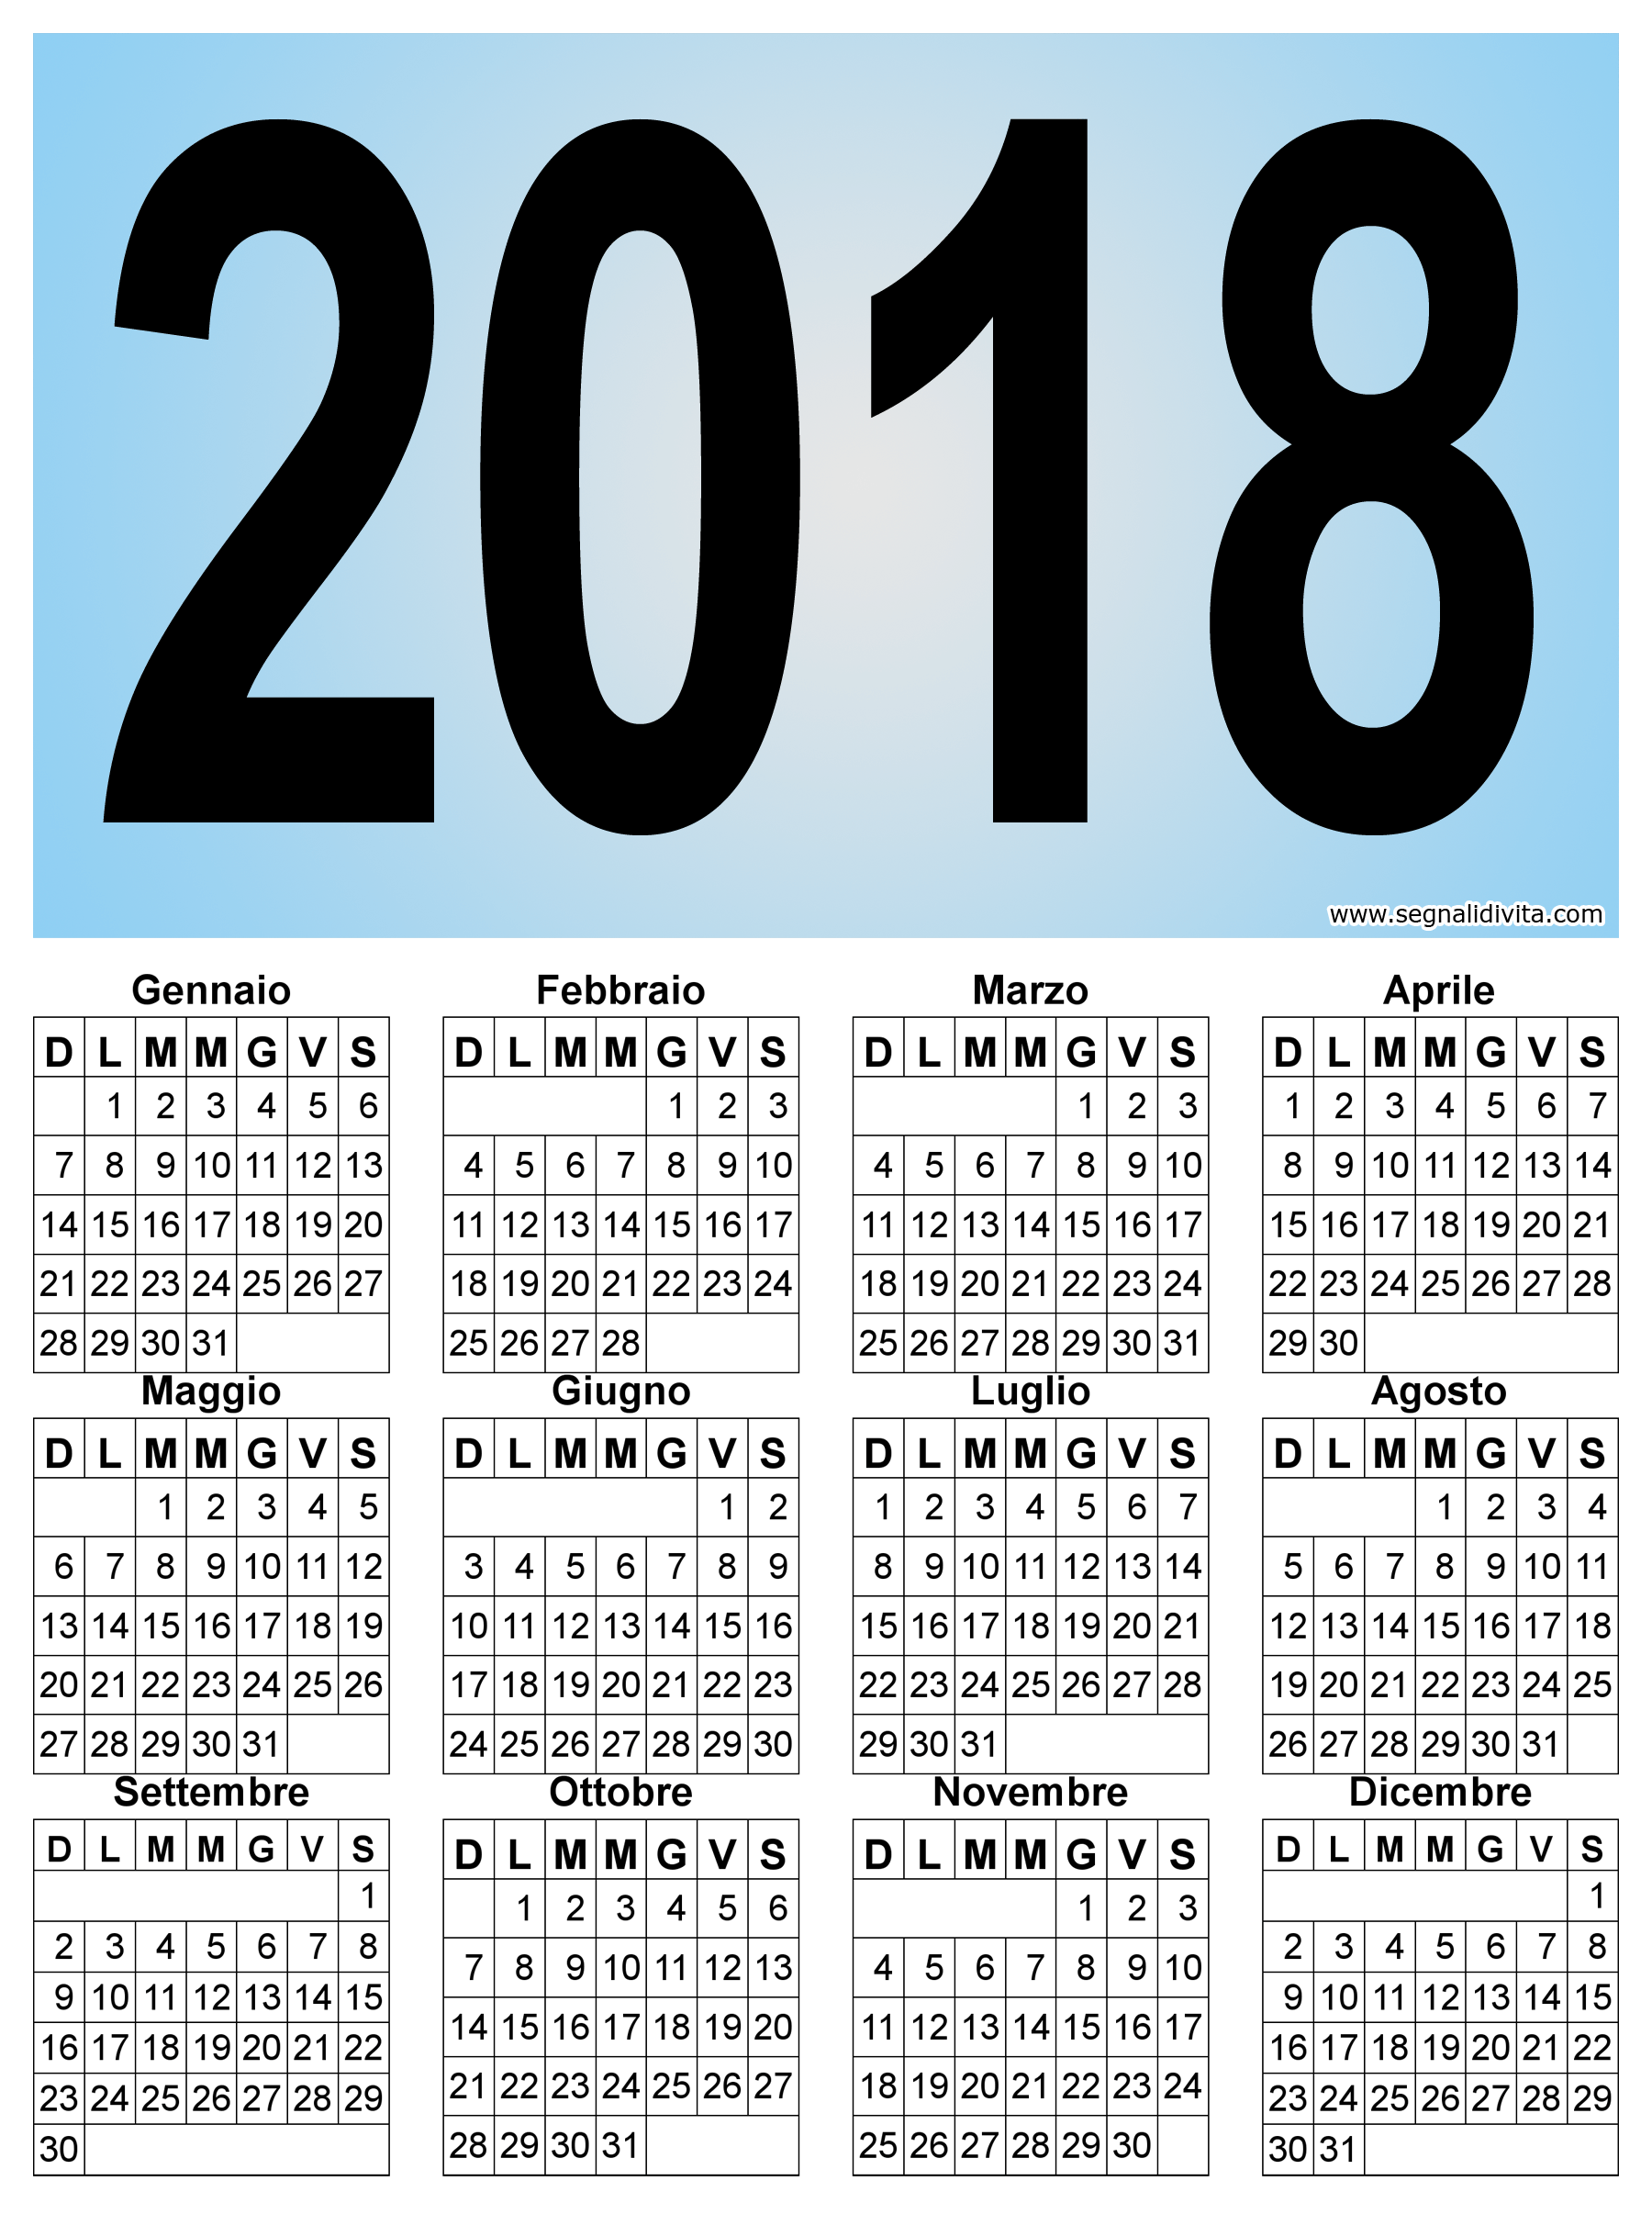 Calendario 2018 grande: 1800 x 2412 pixel